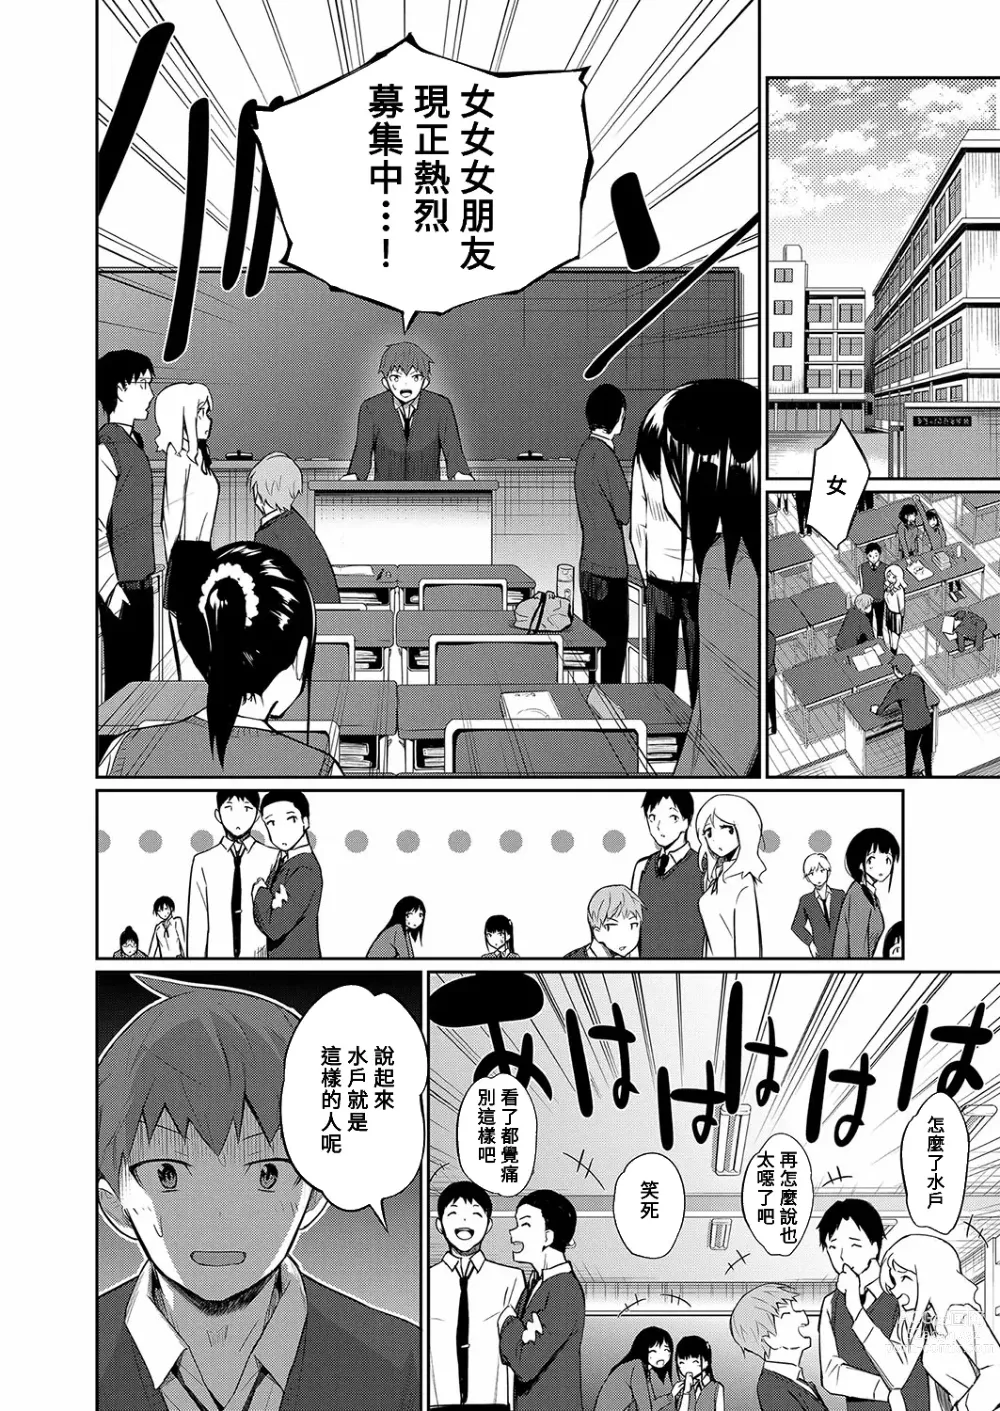 Page 2 of manga Tasukete! Jimiko ni Okasaremasu!